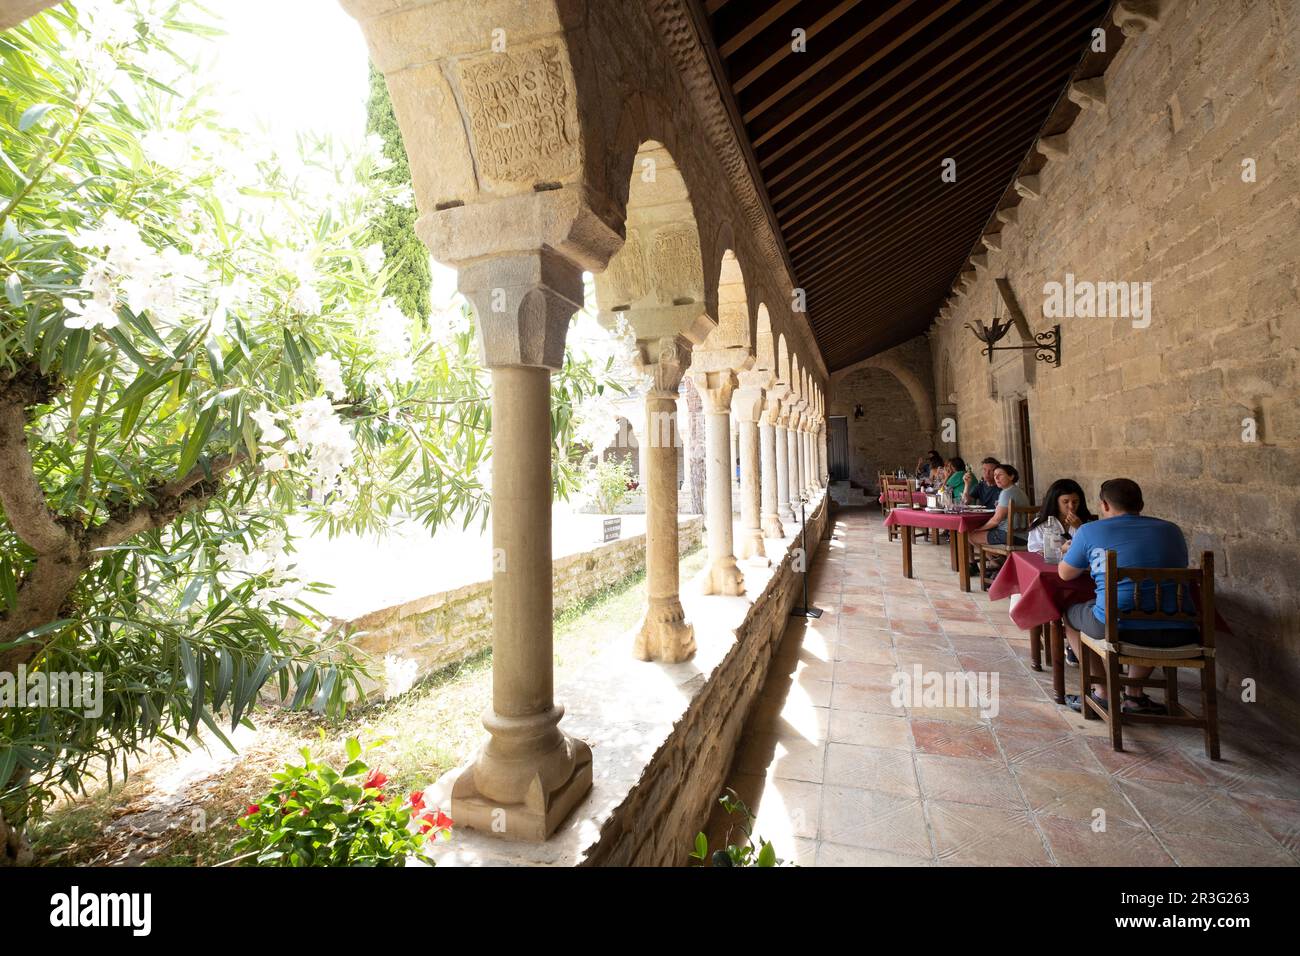 cloister of the former cathedral of San Vicente, Roda de Isábena, Isábena Valley, Huesca, Spain. Stock Photo